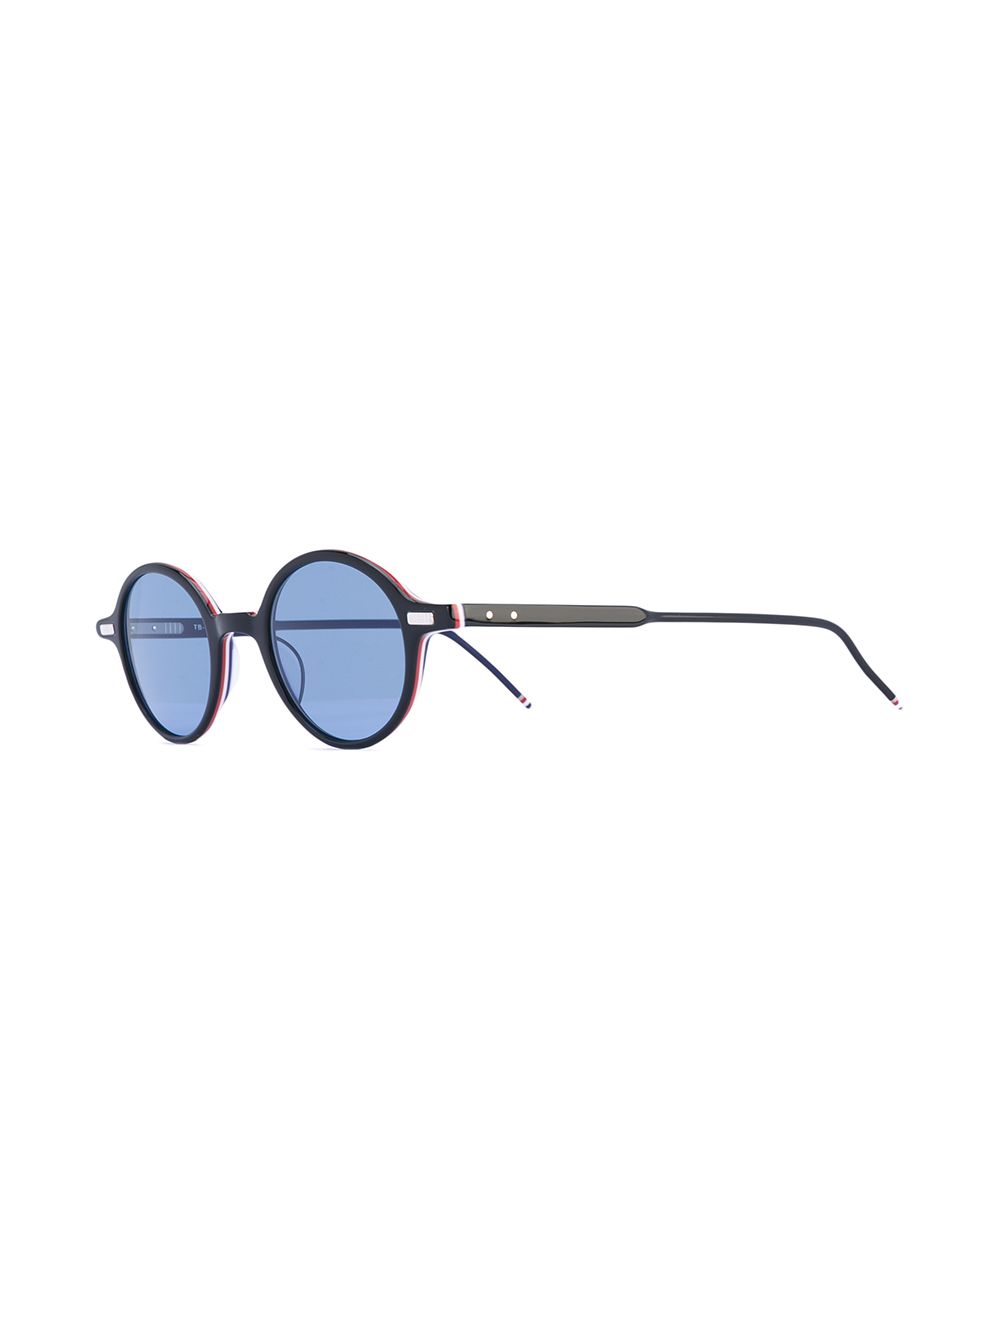 фото Thom browne eyewear солнцезащитные очки круглой форм